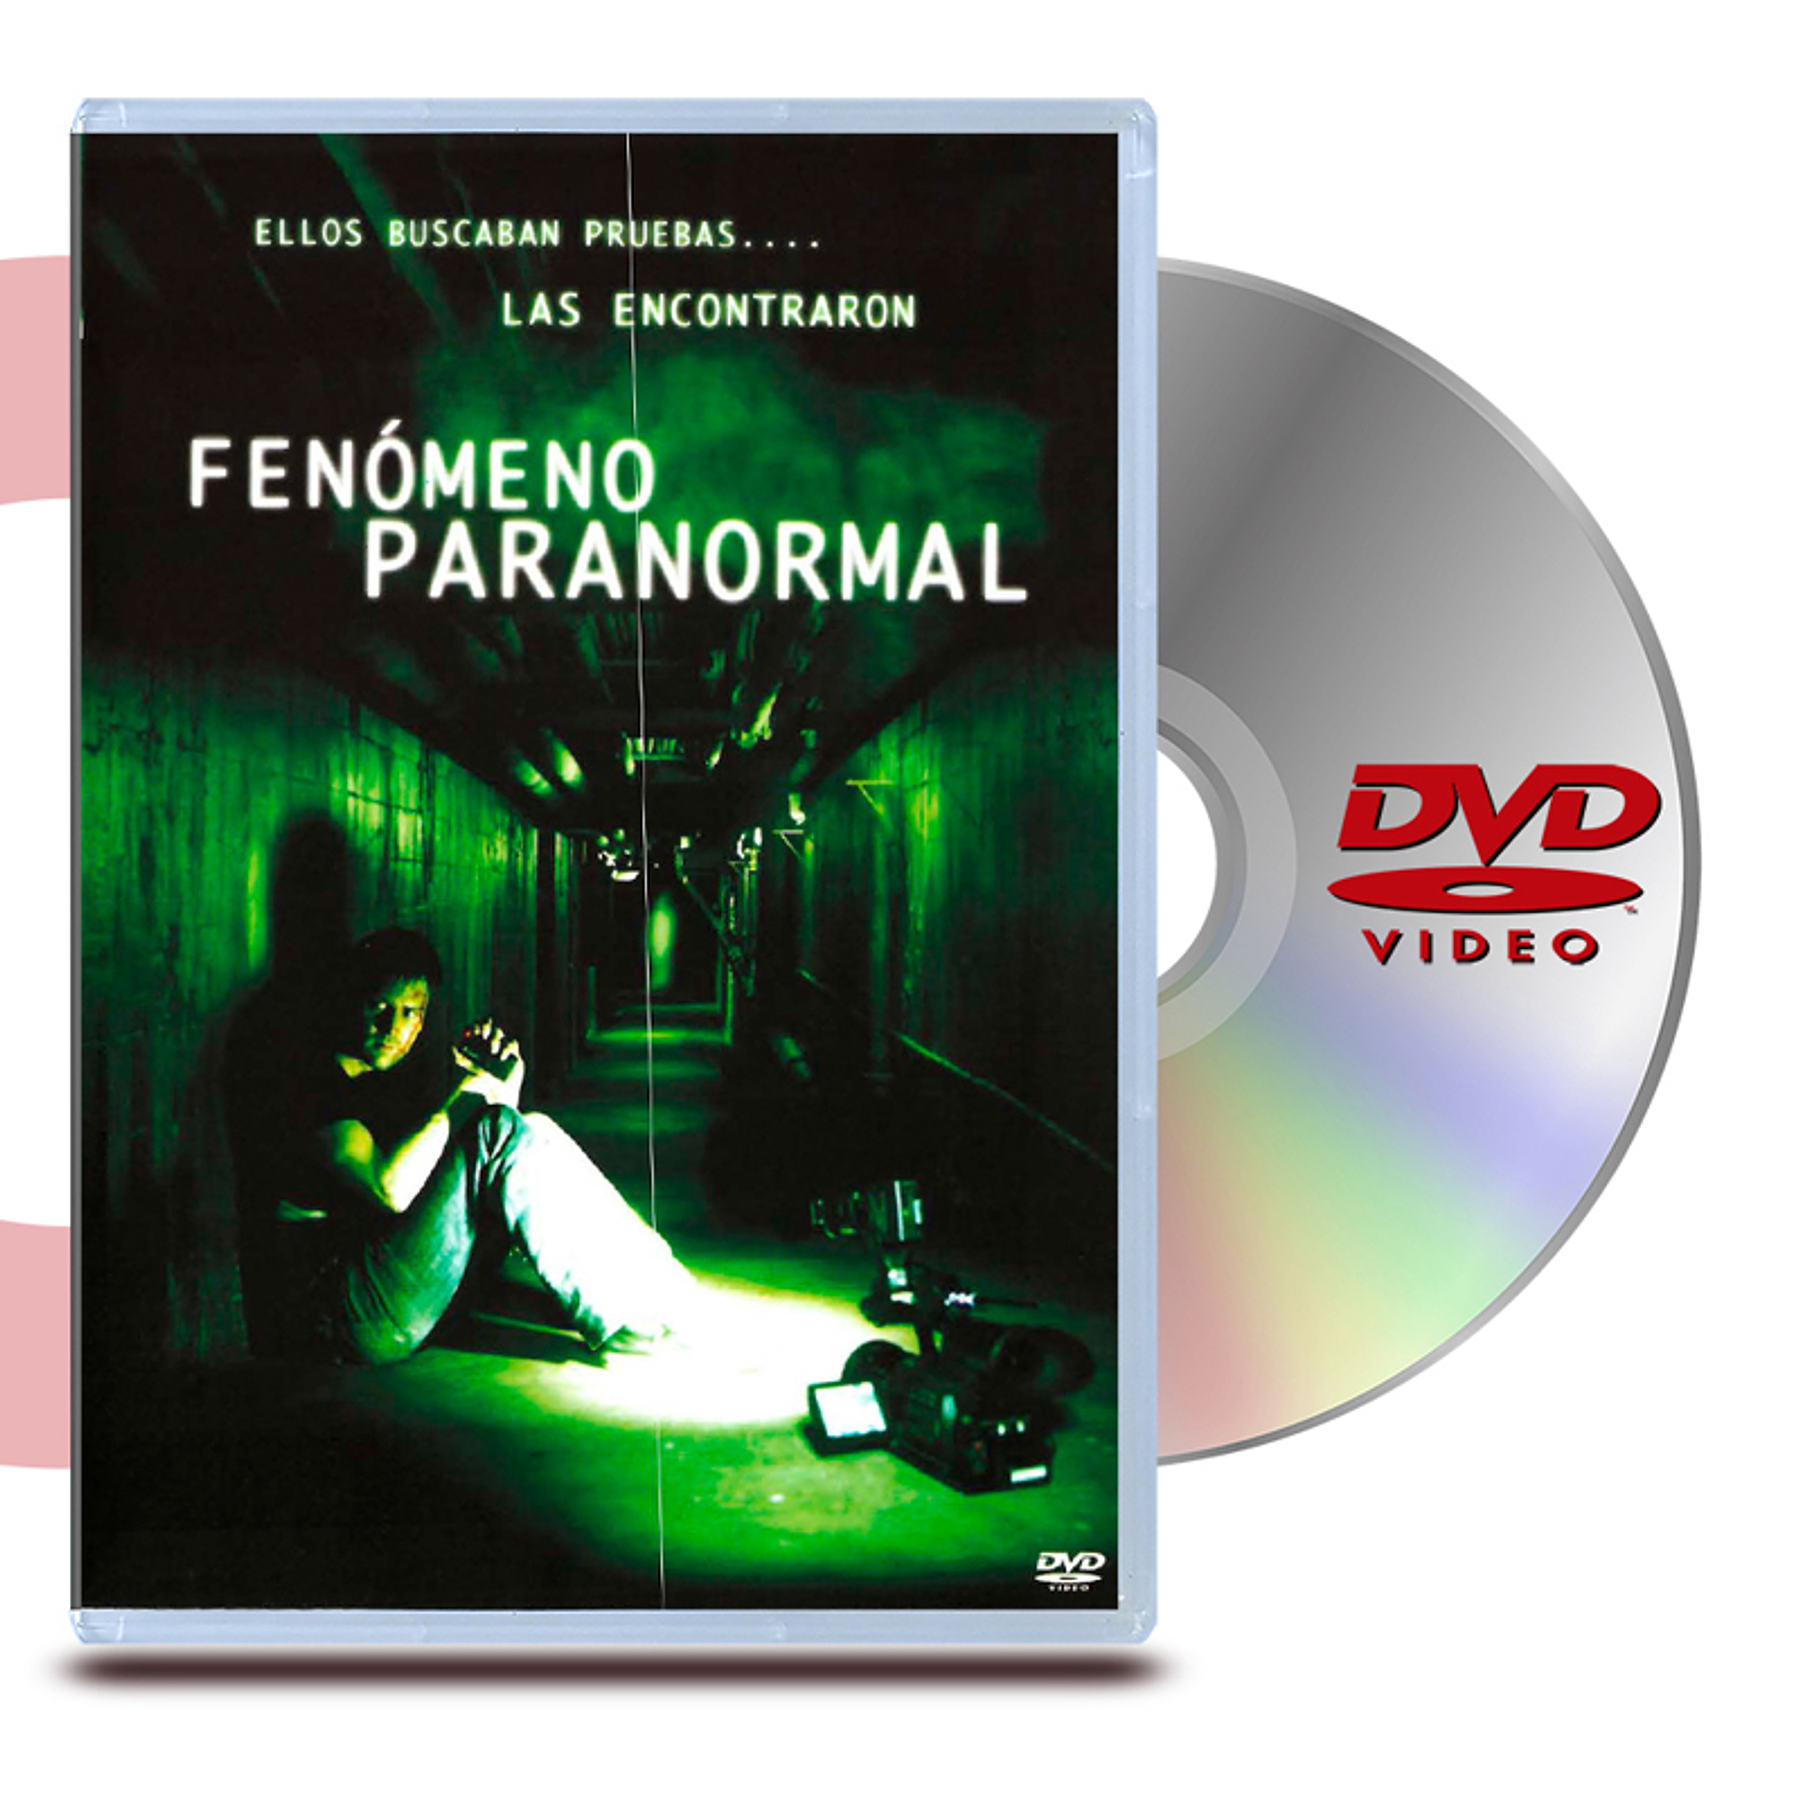 DVD FENOMENO PARANORMAL